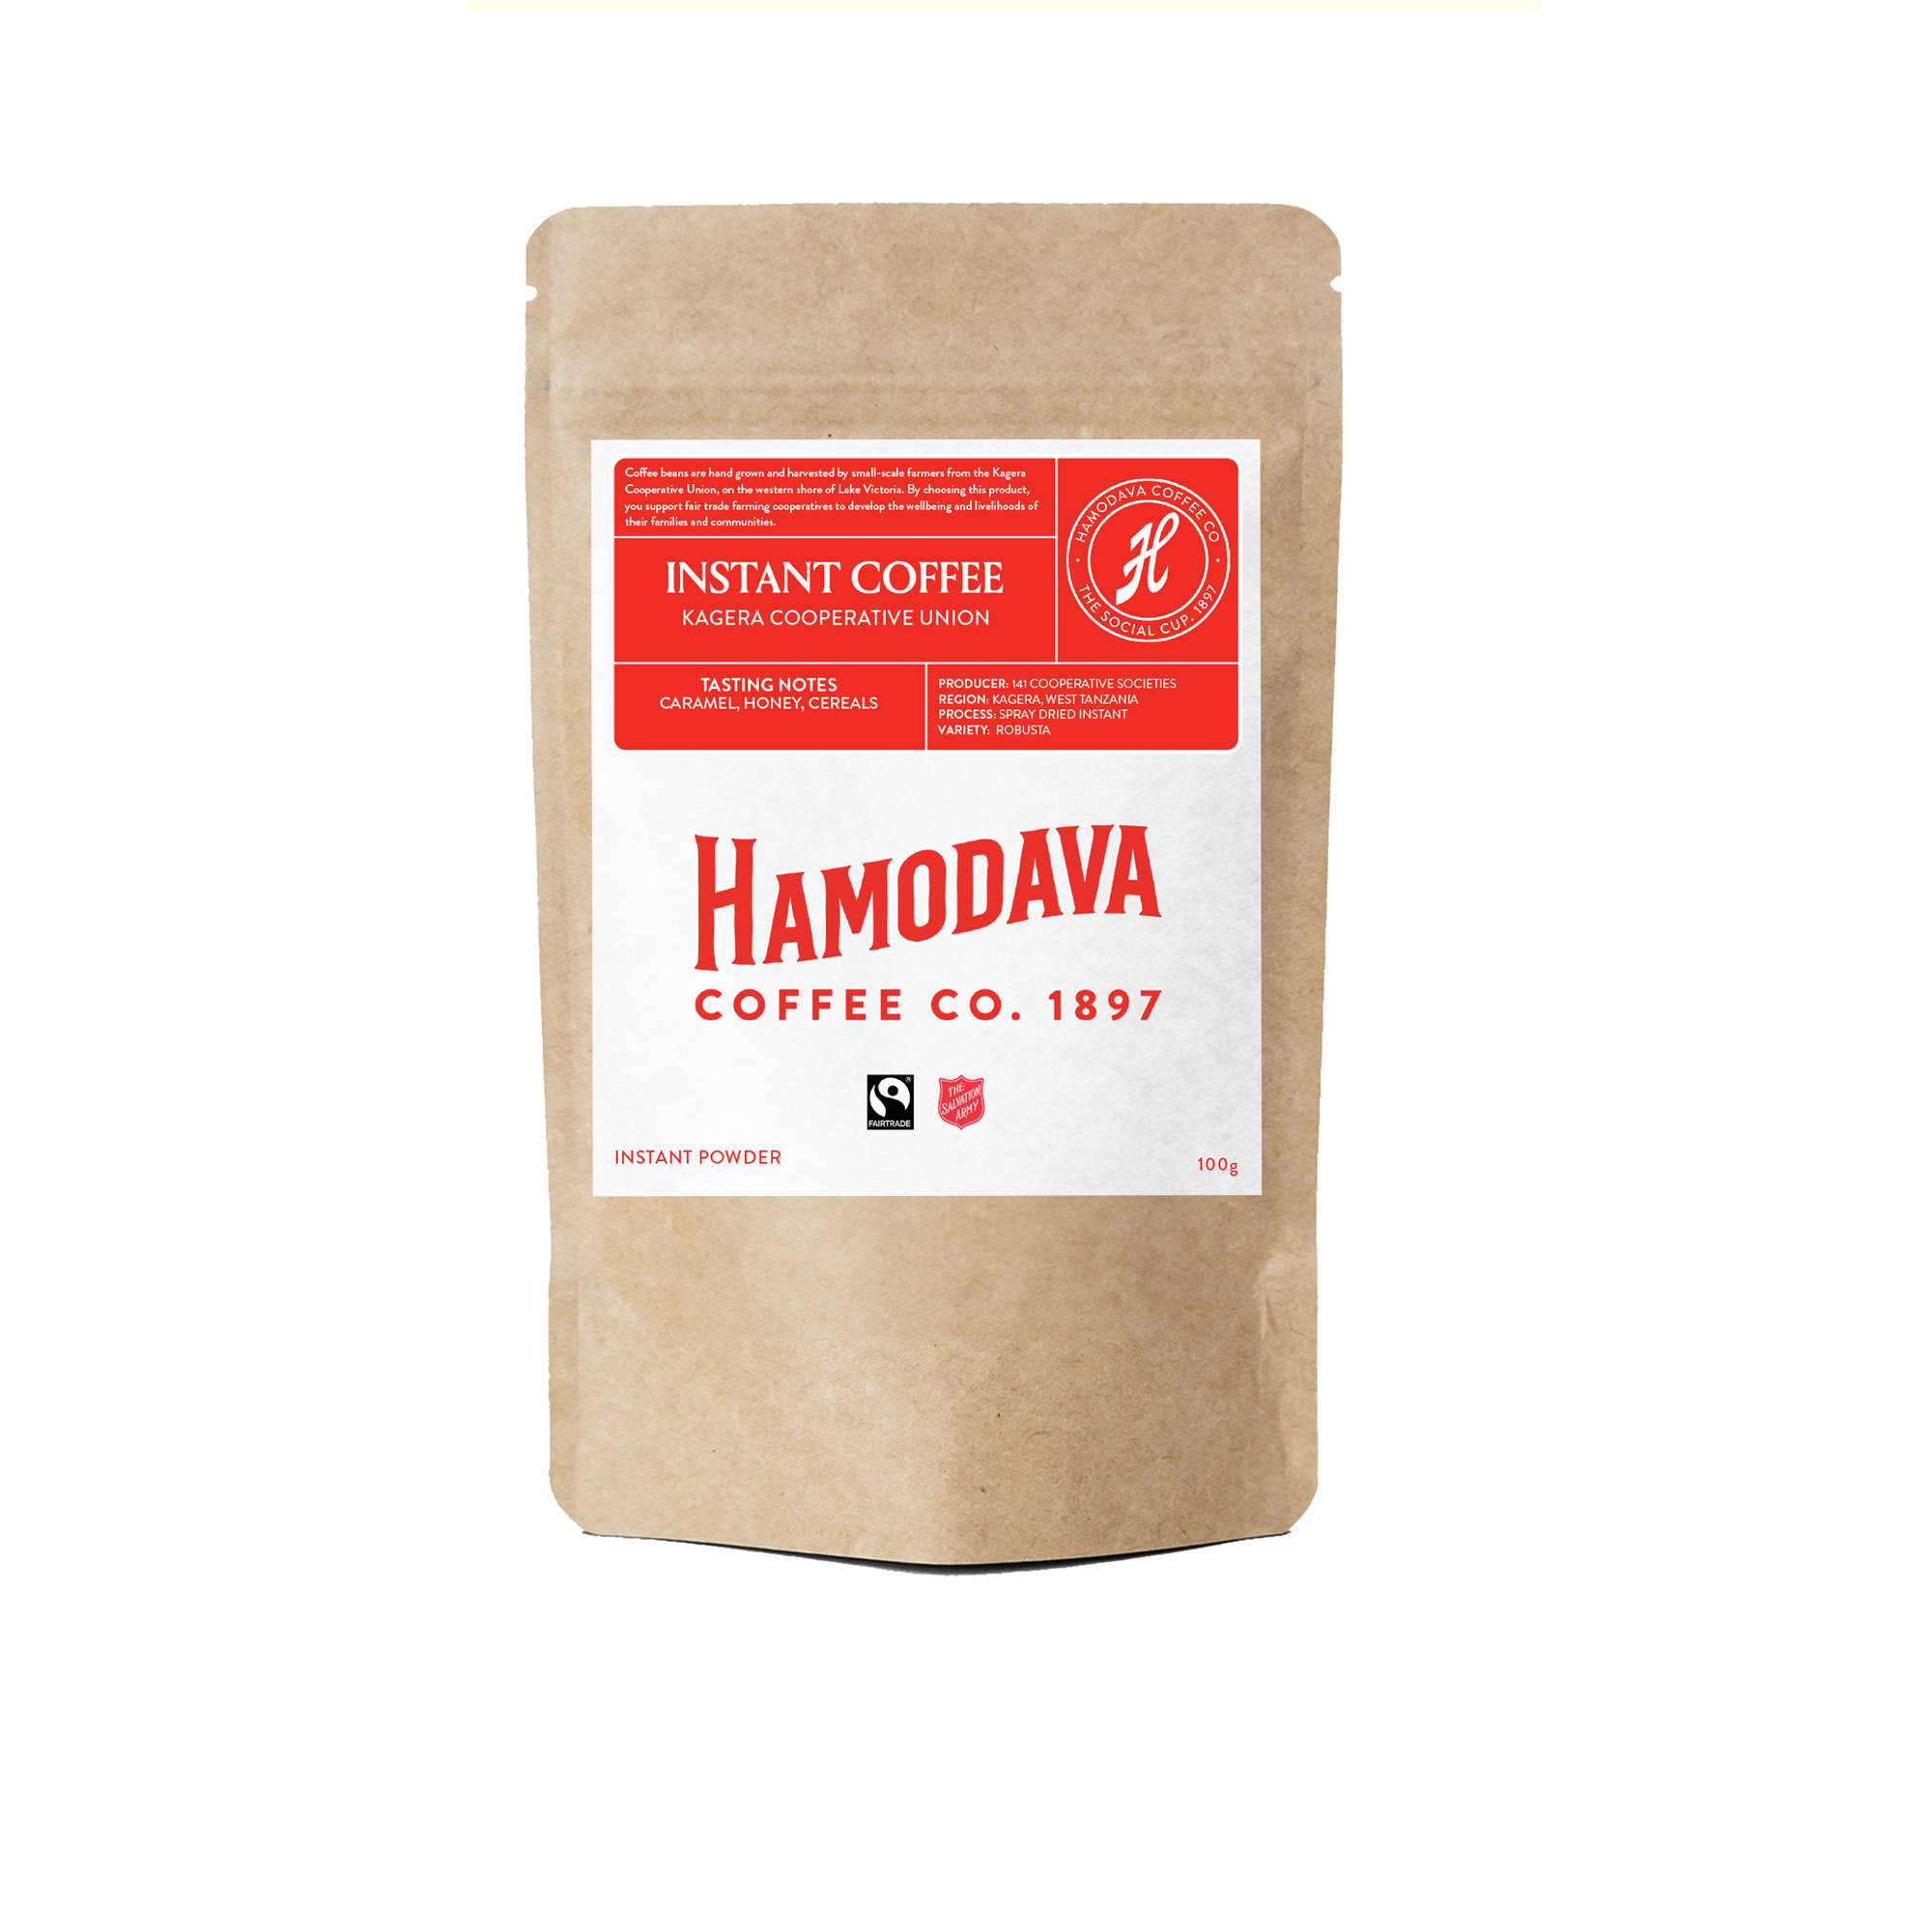 Hamodava Instant Coffee